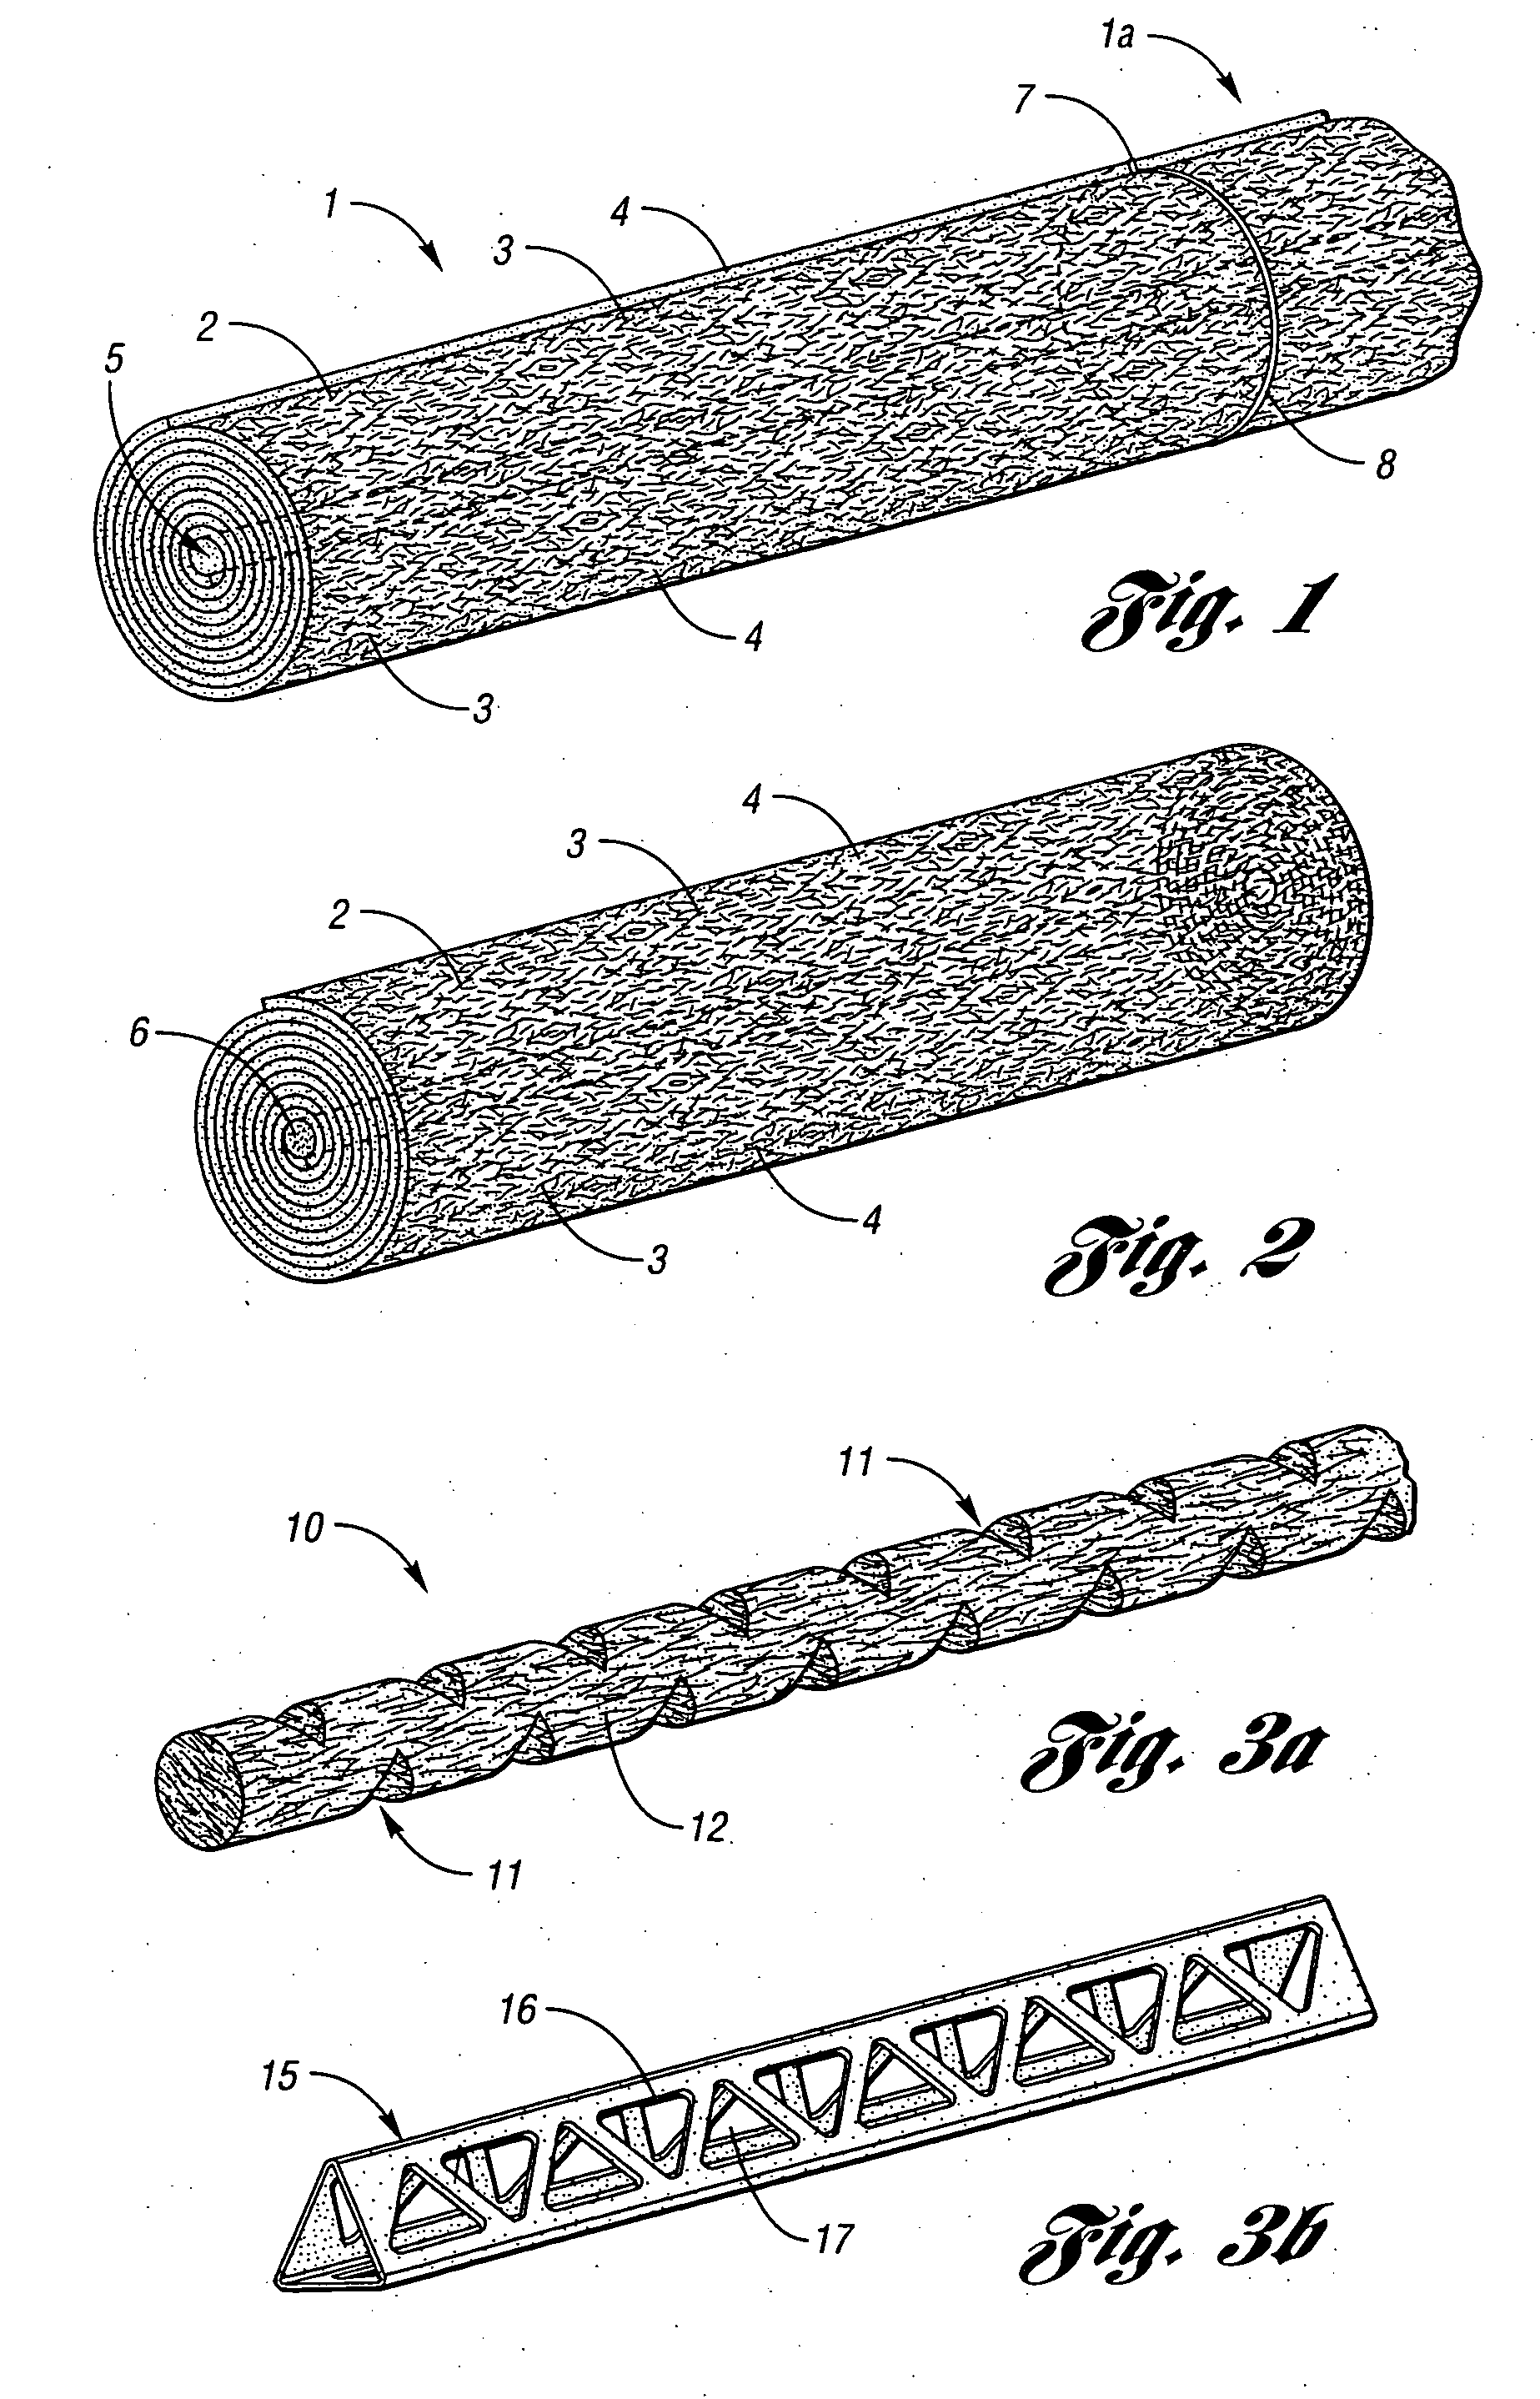 Mandrel-wound flocculant-containing fiber filtration tubes